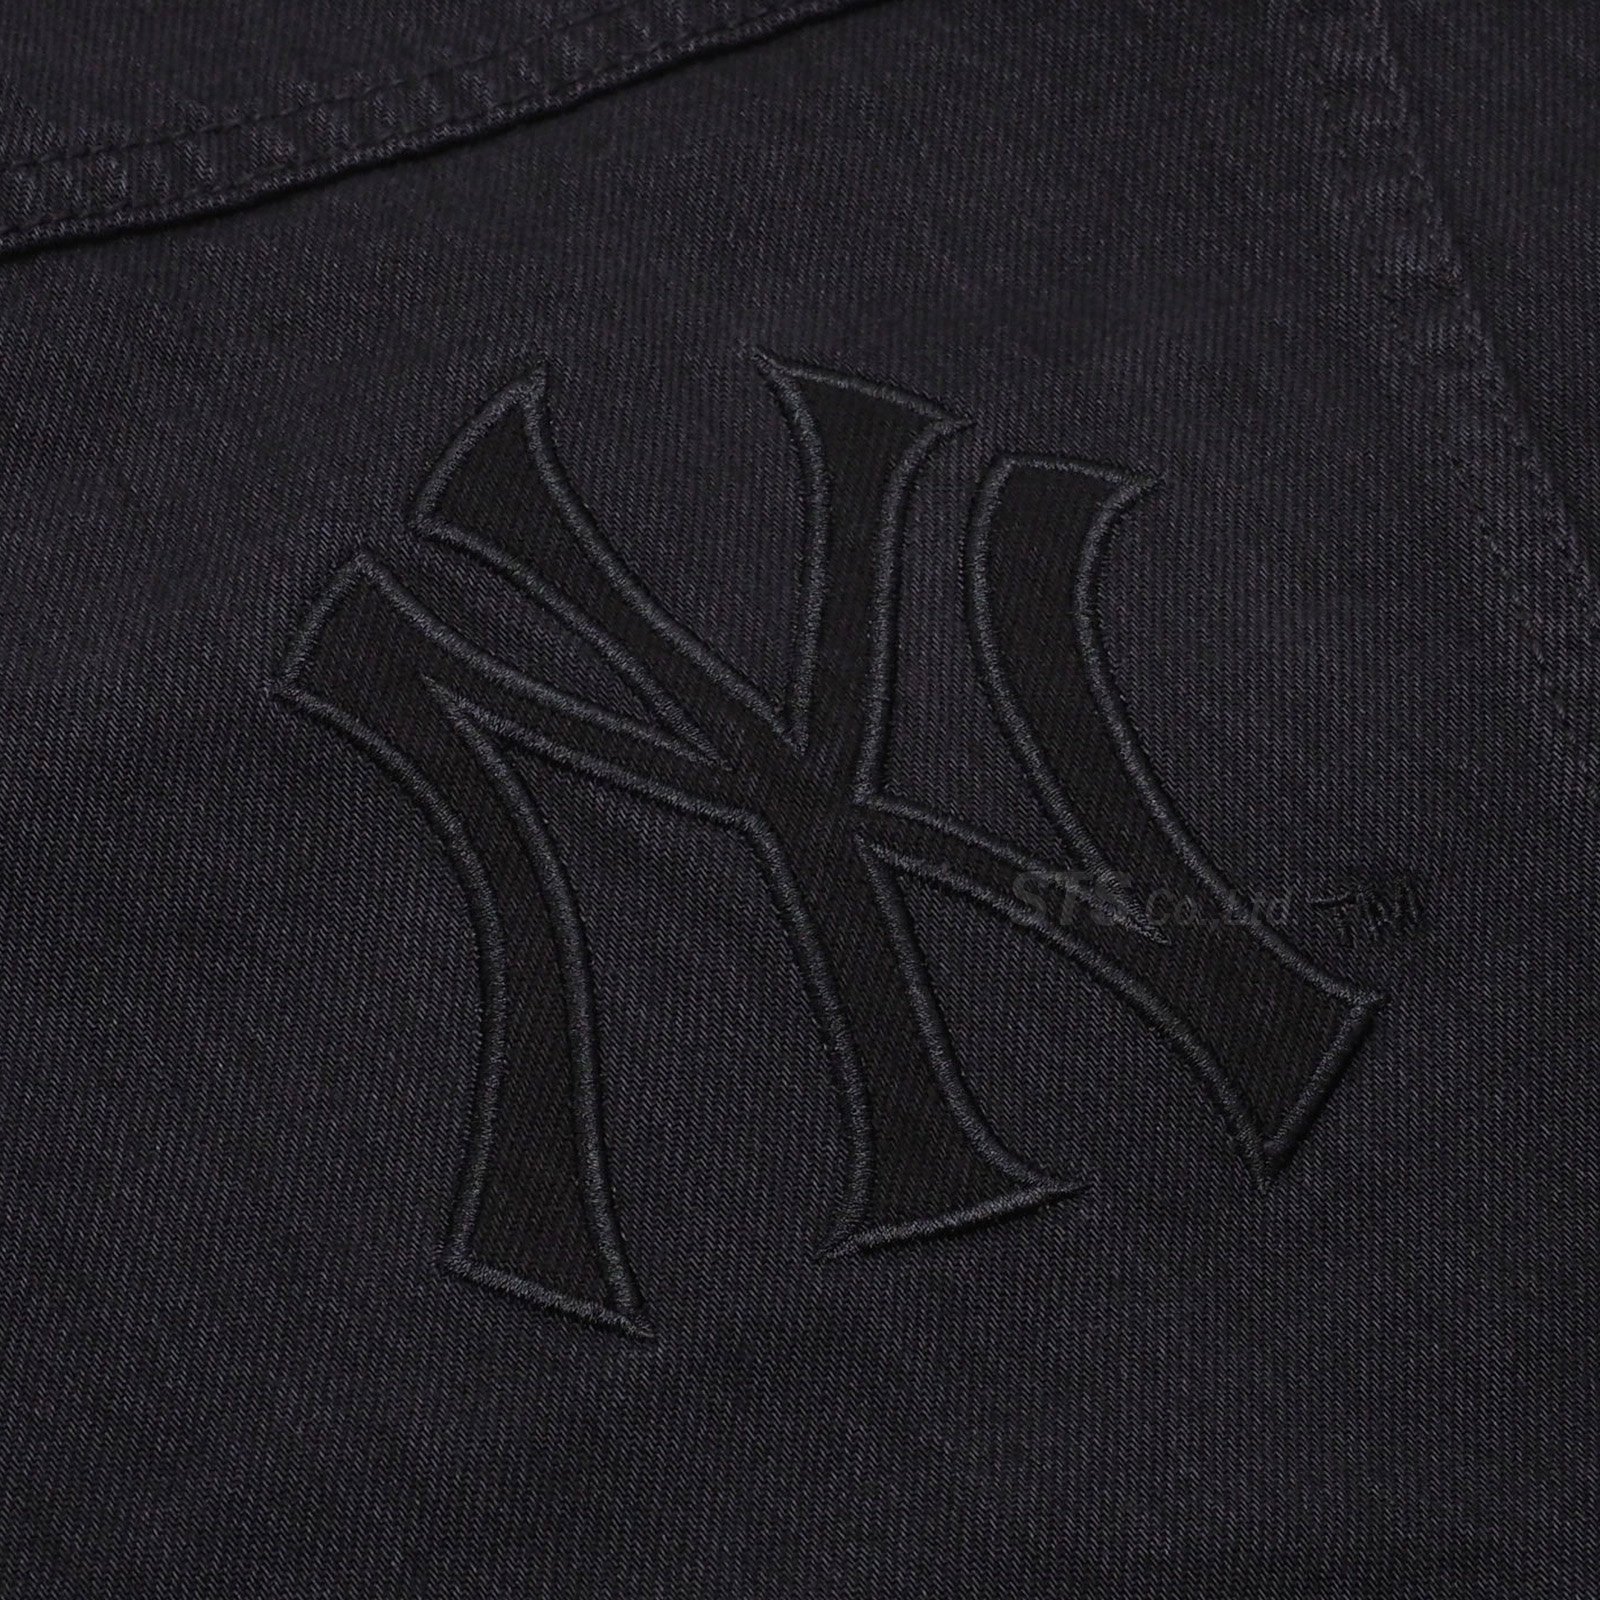 Supreme®/New York Yankees™ Denim Trucker Jacket - Fall/Winter 2021